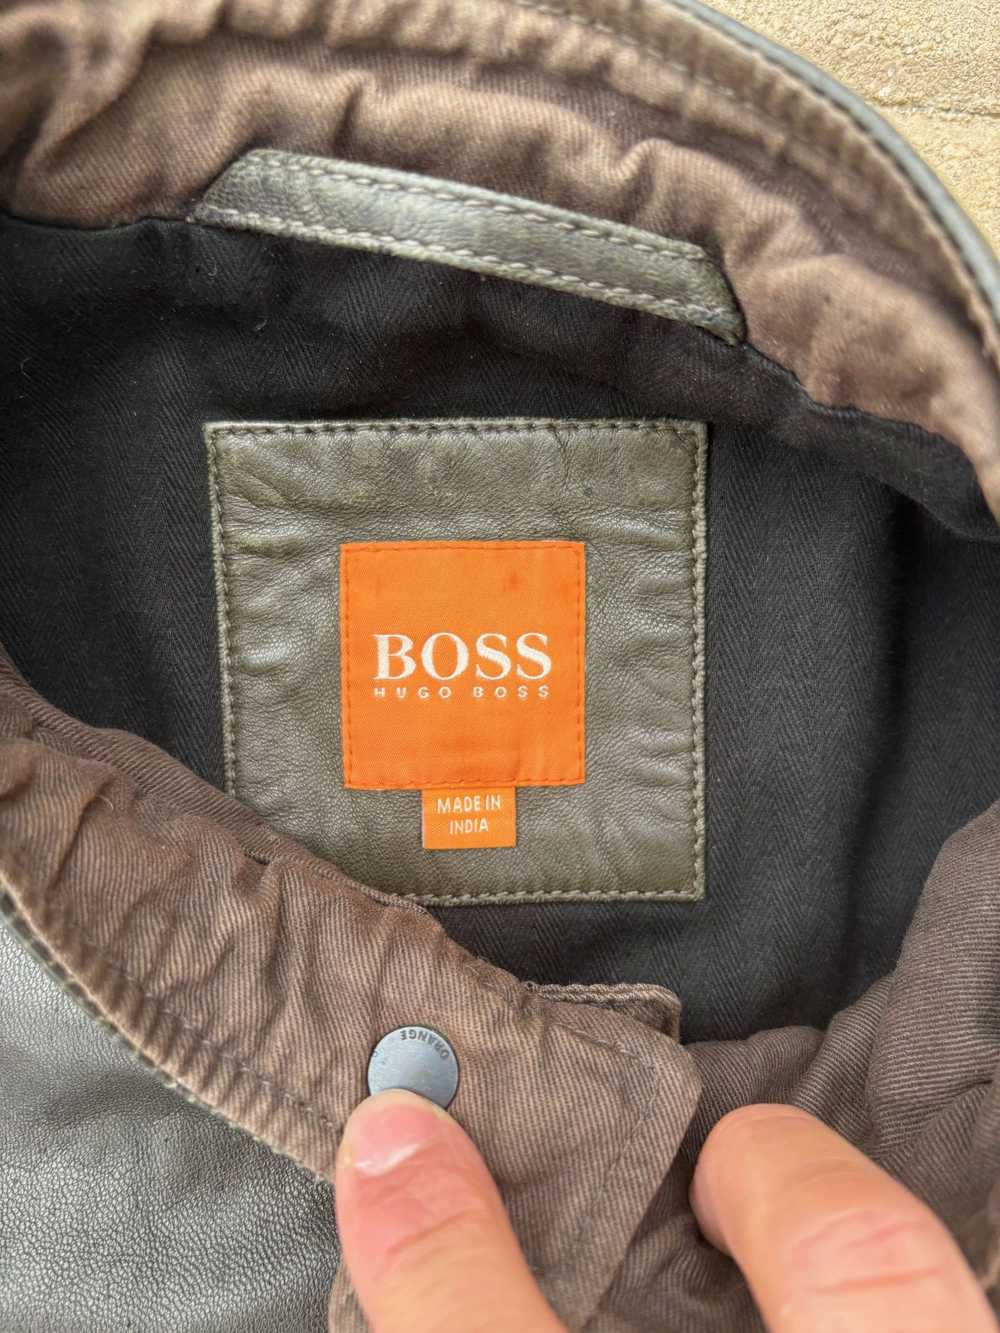 Hugo Boss Hugo Boss Leather Jacket - image 3